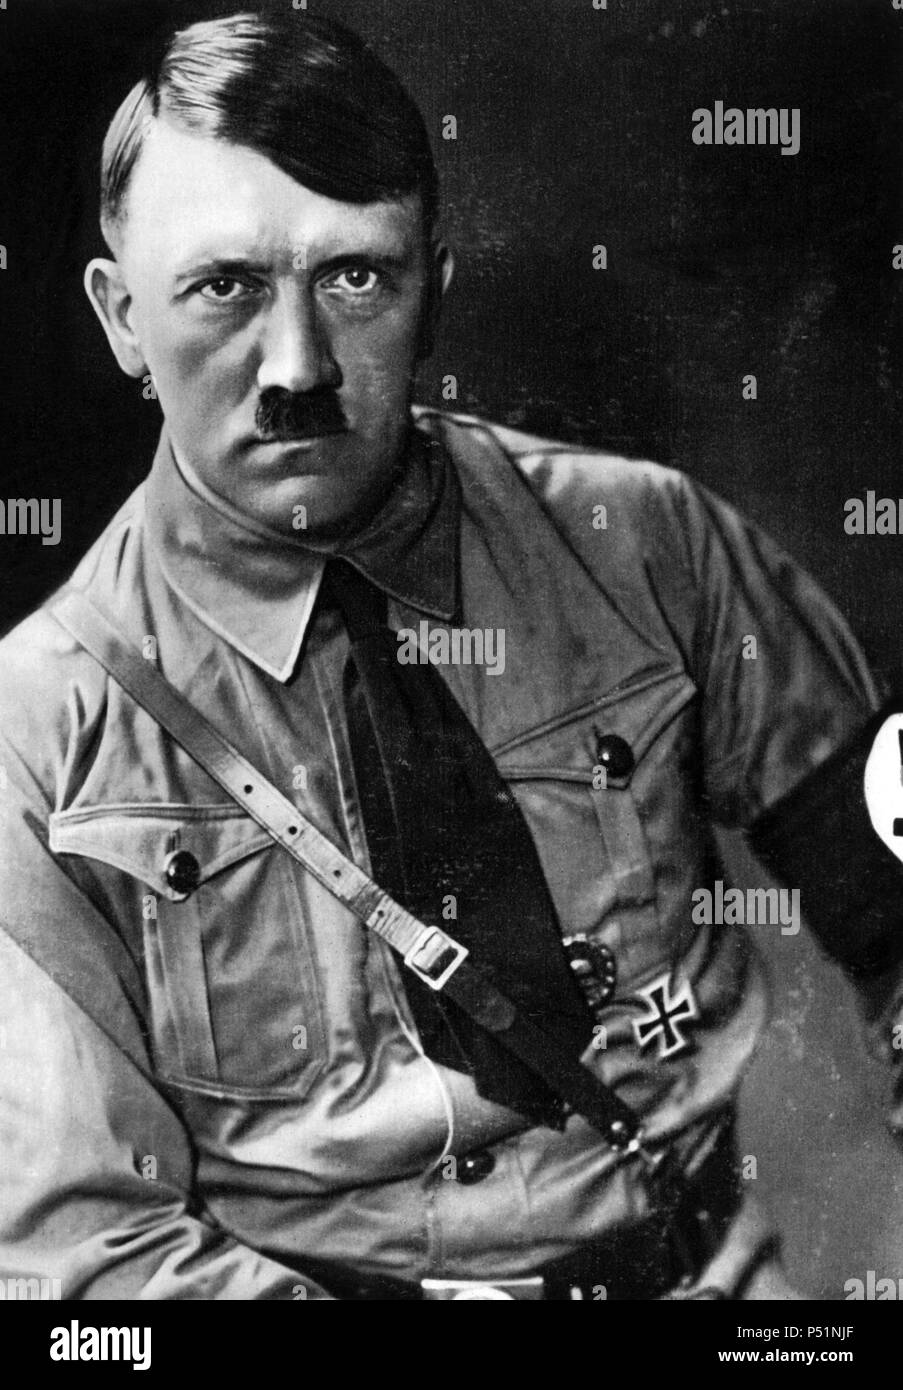 Adolf Hitler, photo in uniform, c. 1933. Stock Photo